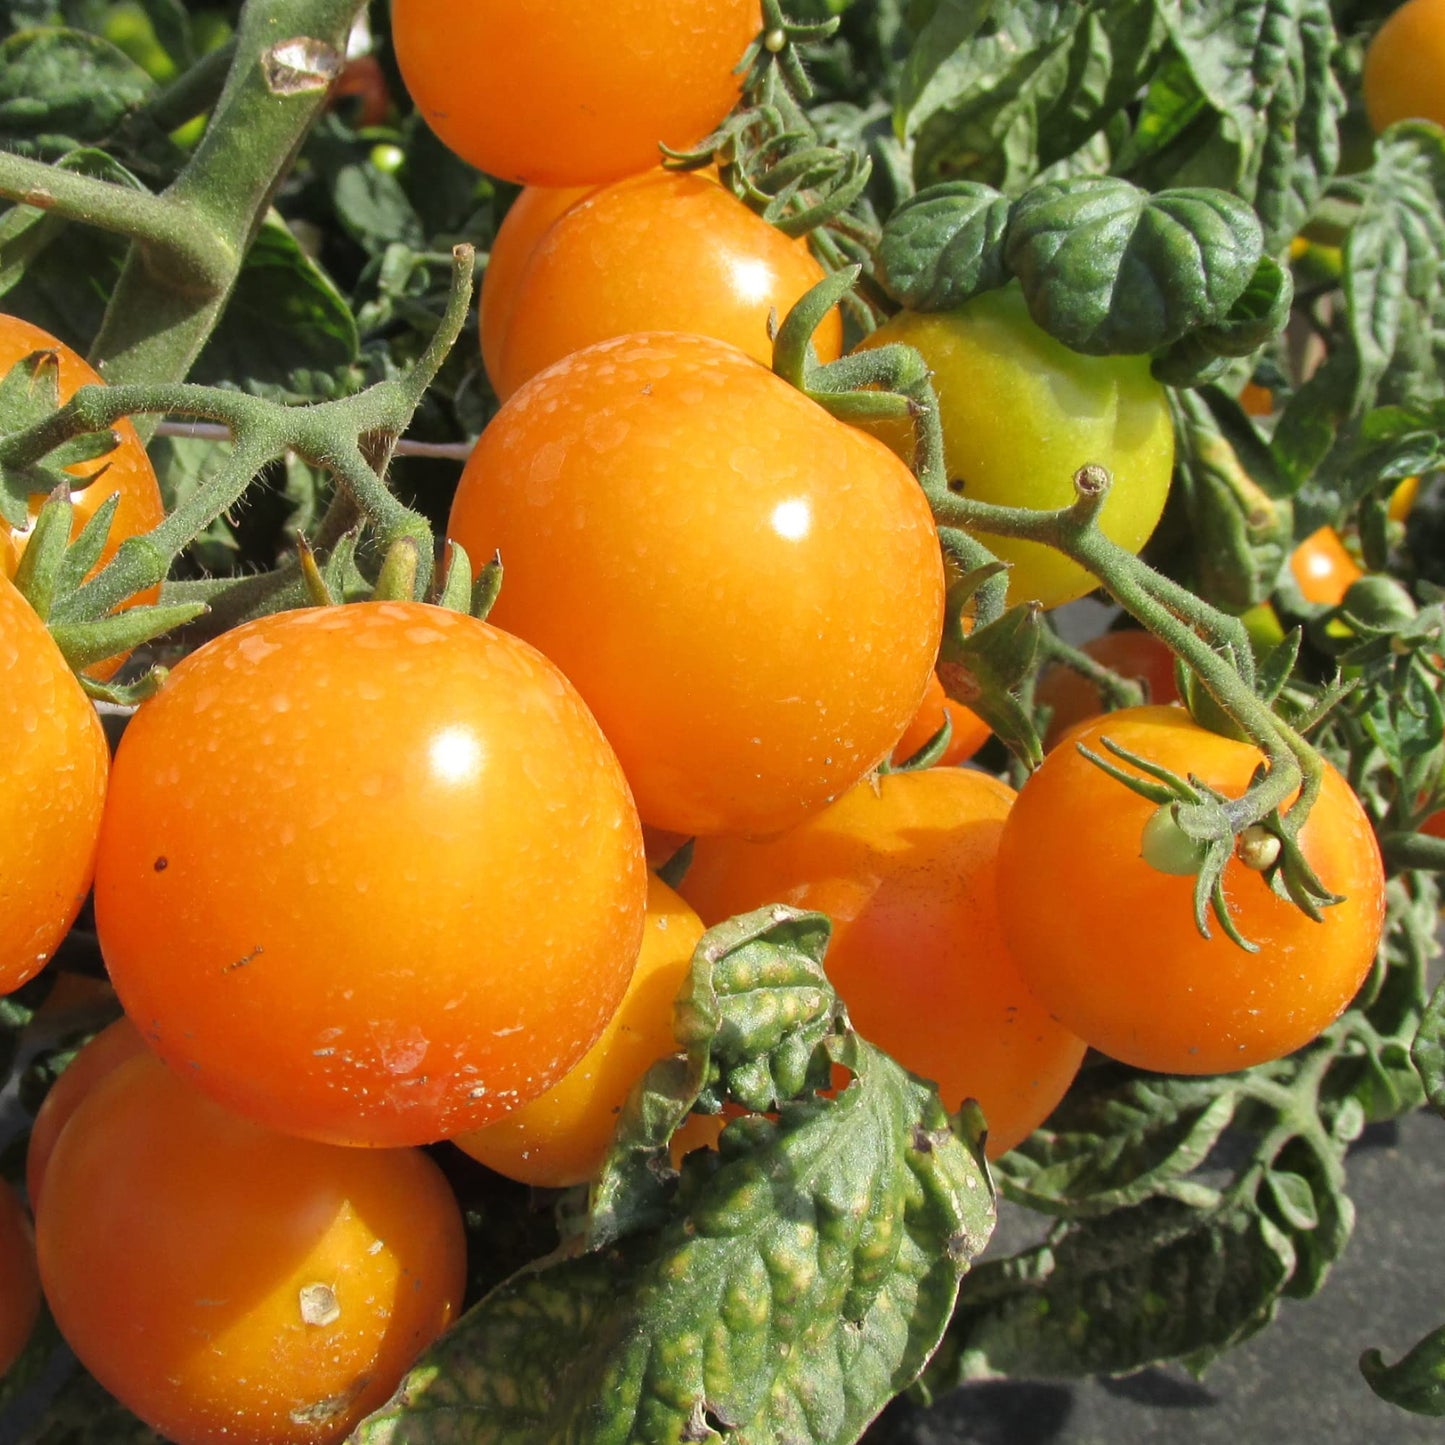 Heritage Tomato Plants - 'Honeycombe' - 6 x Large Plants in 10.5cm Pots